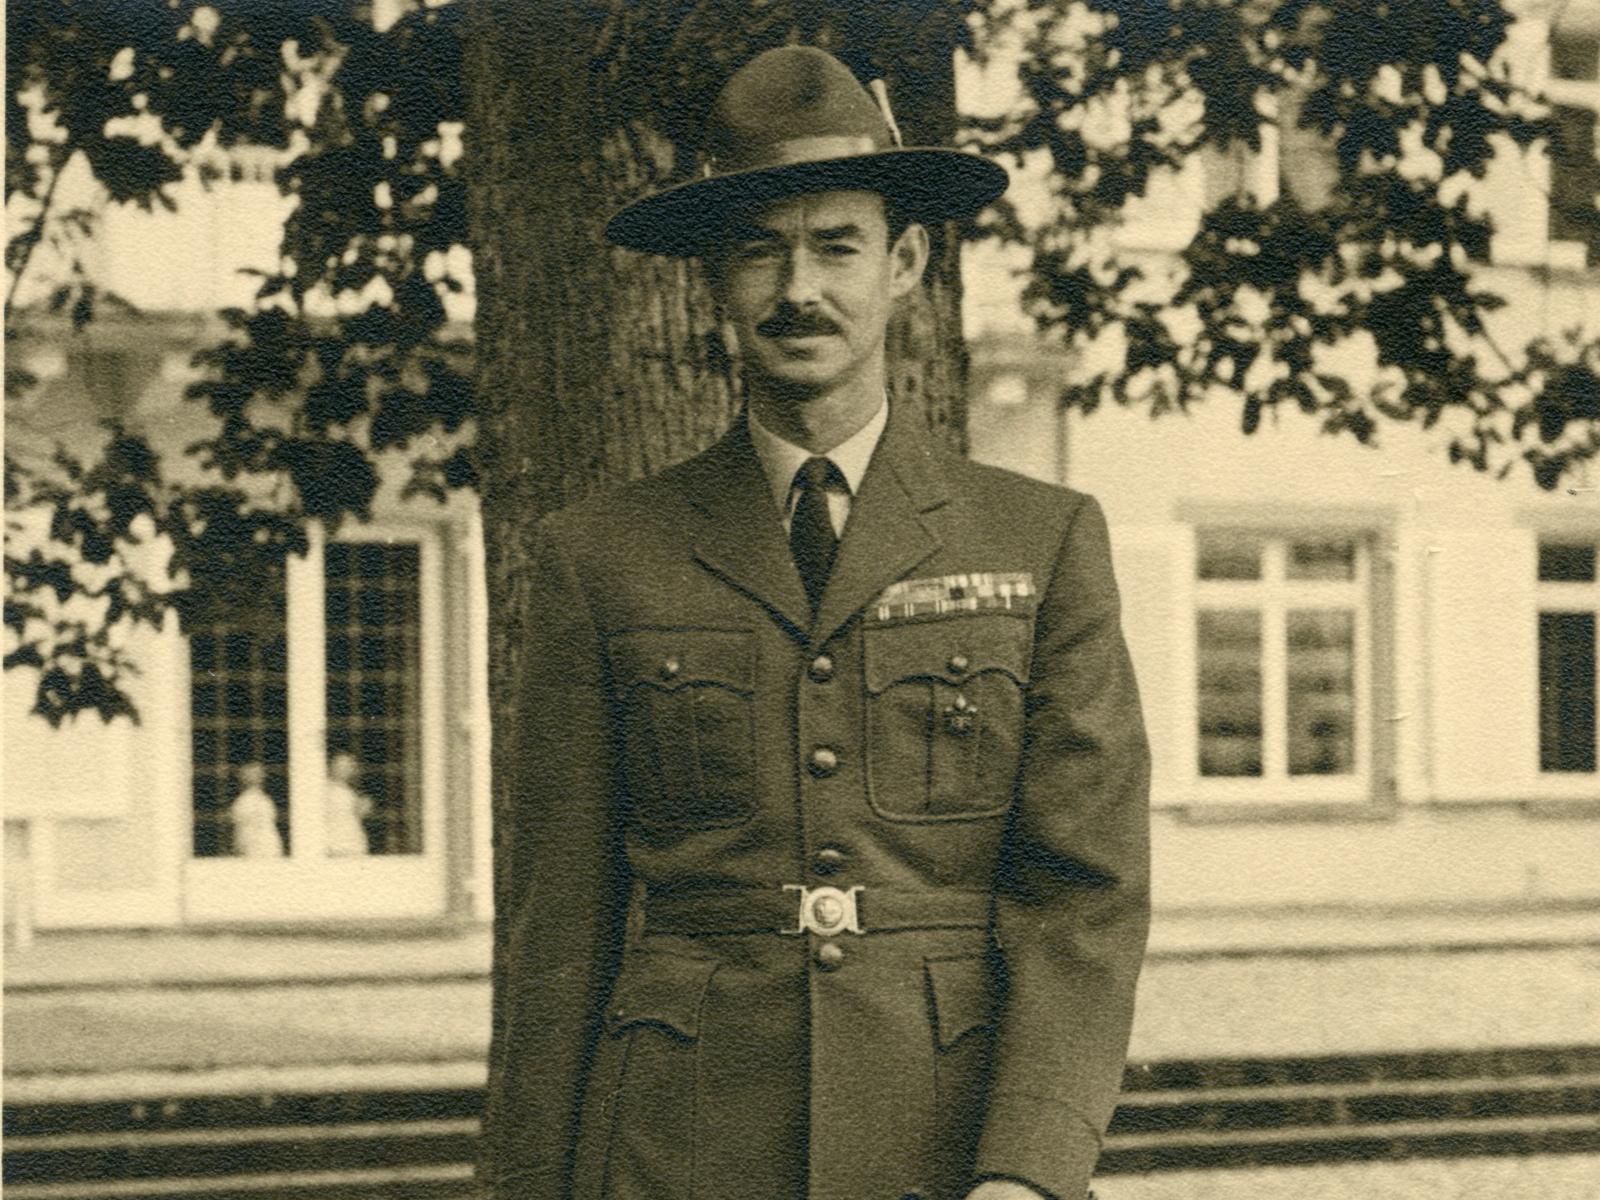 Prince Jean in Scout uniform